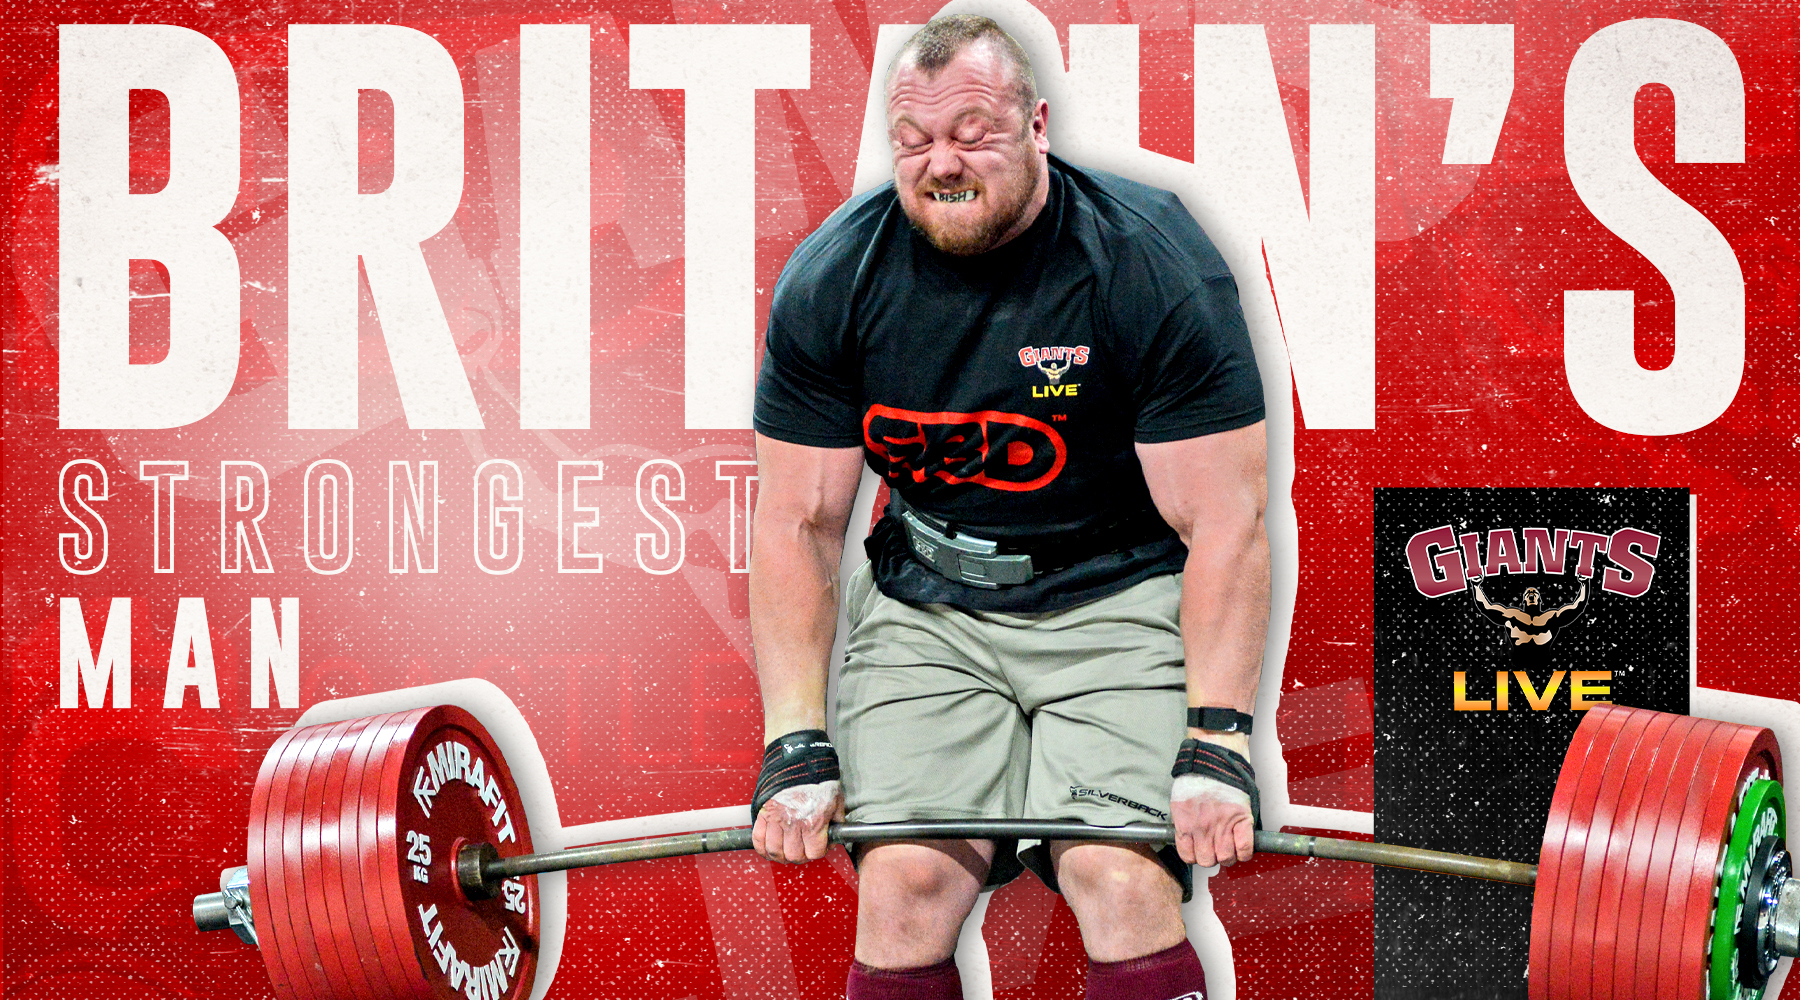 Britain's Strongest Man, Utilita Arena Sheffield